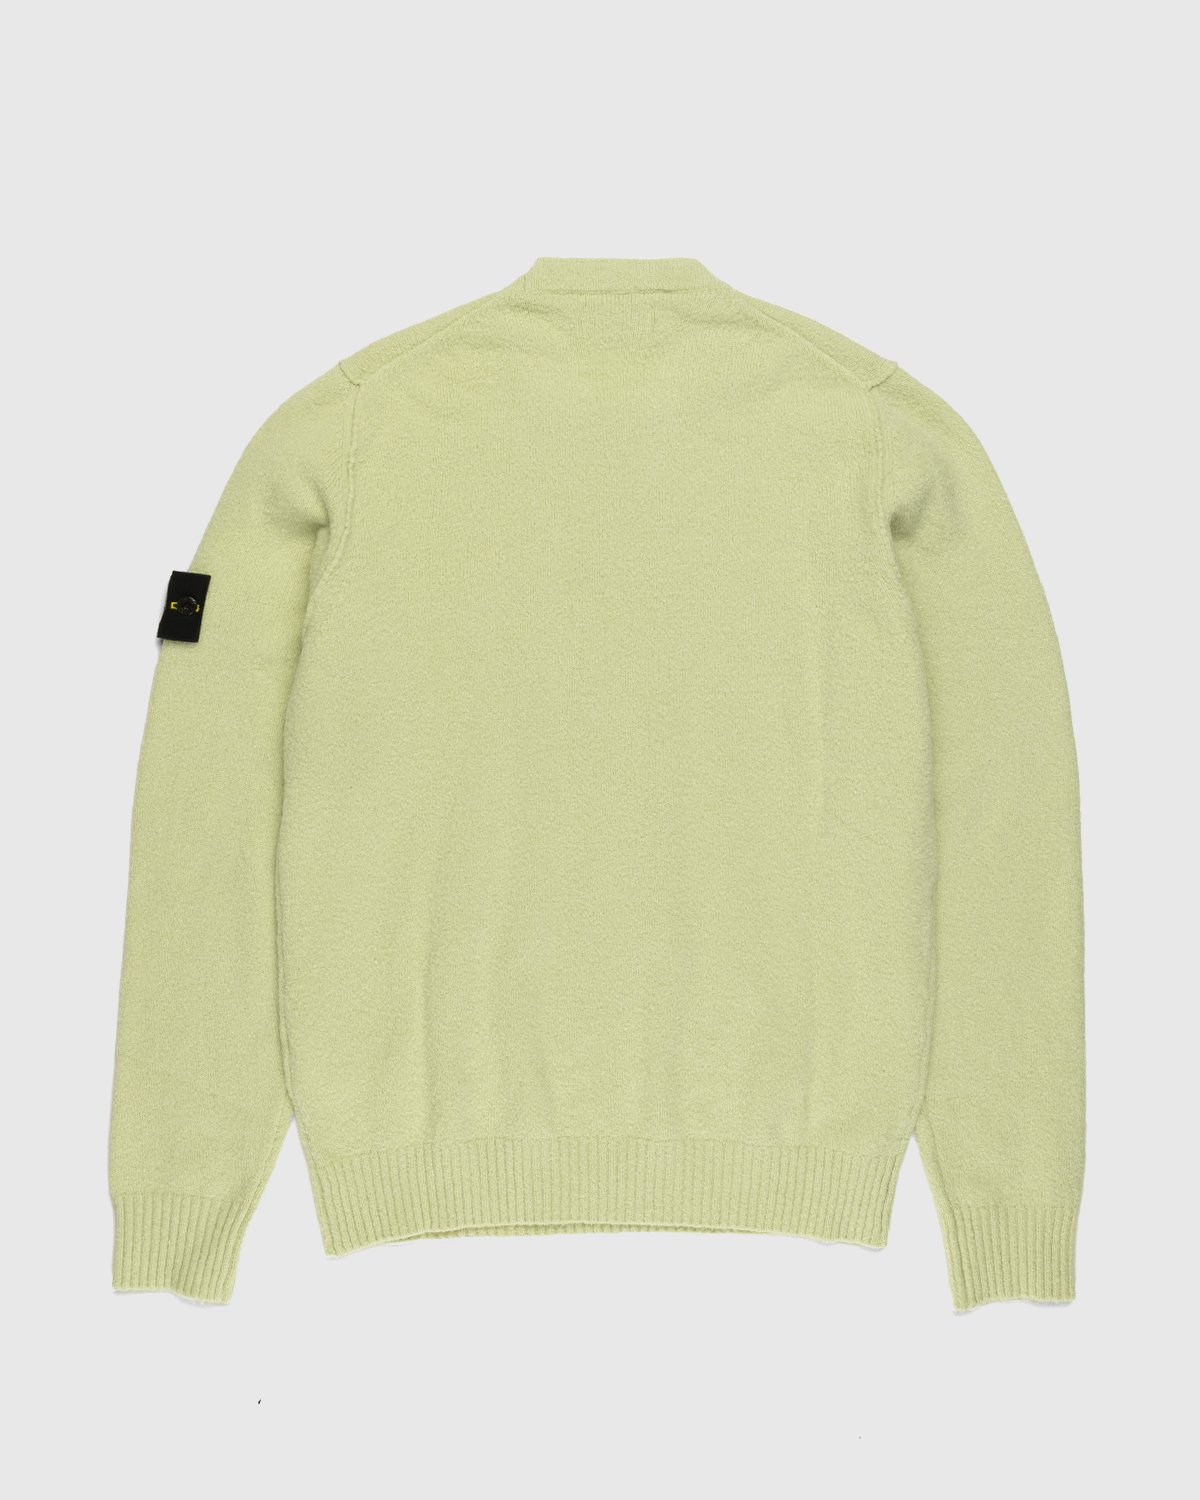 Stone Island - 548D2 Stockinette Stitch Sweater Light Green - Clothing - Green - Image 2